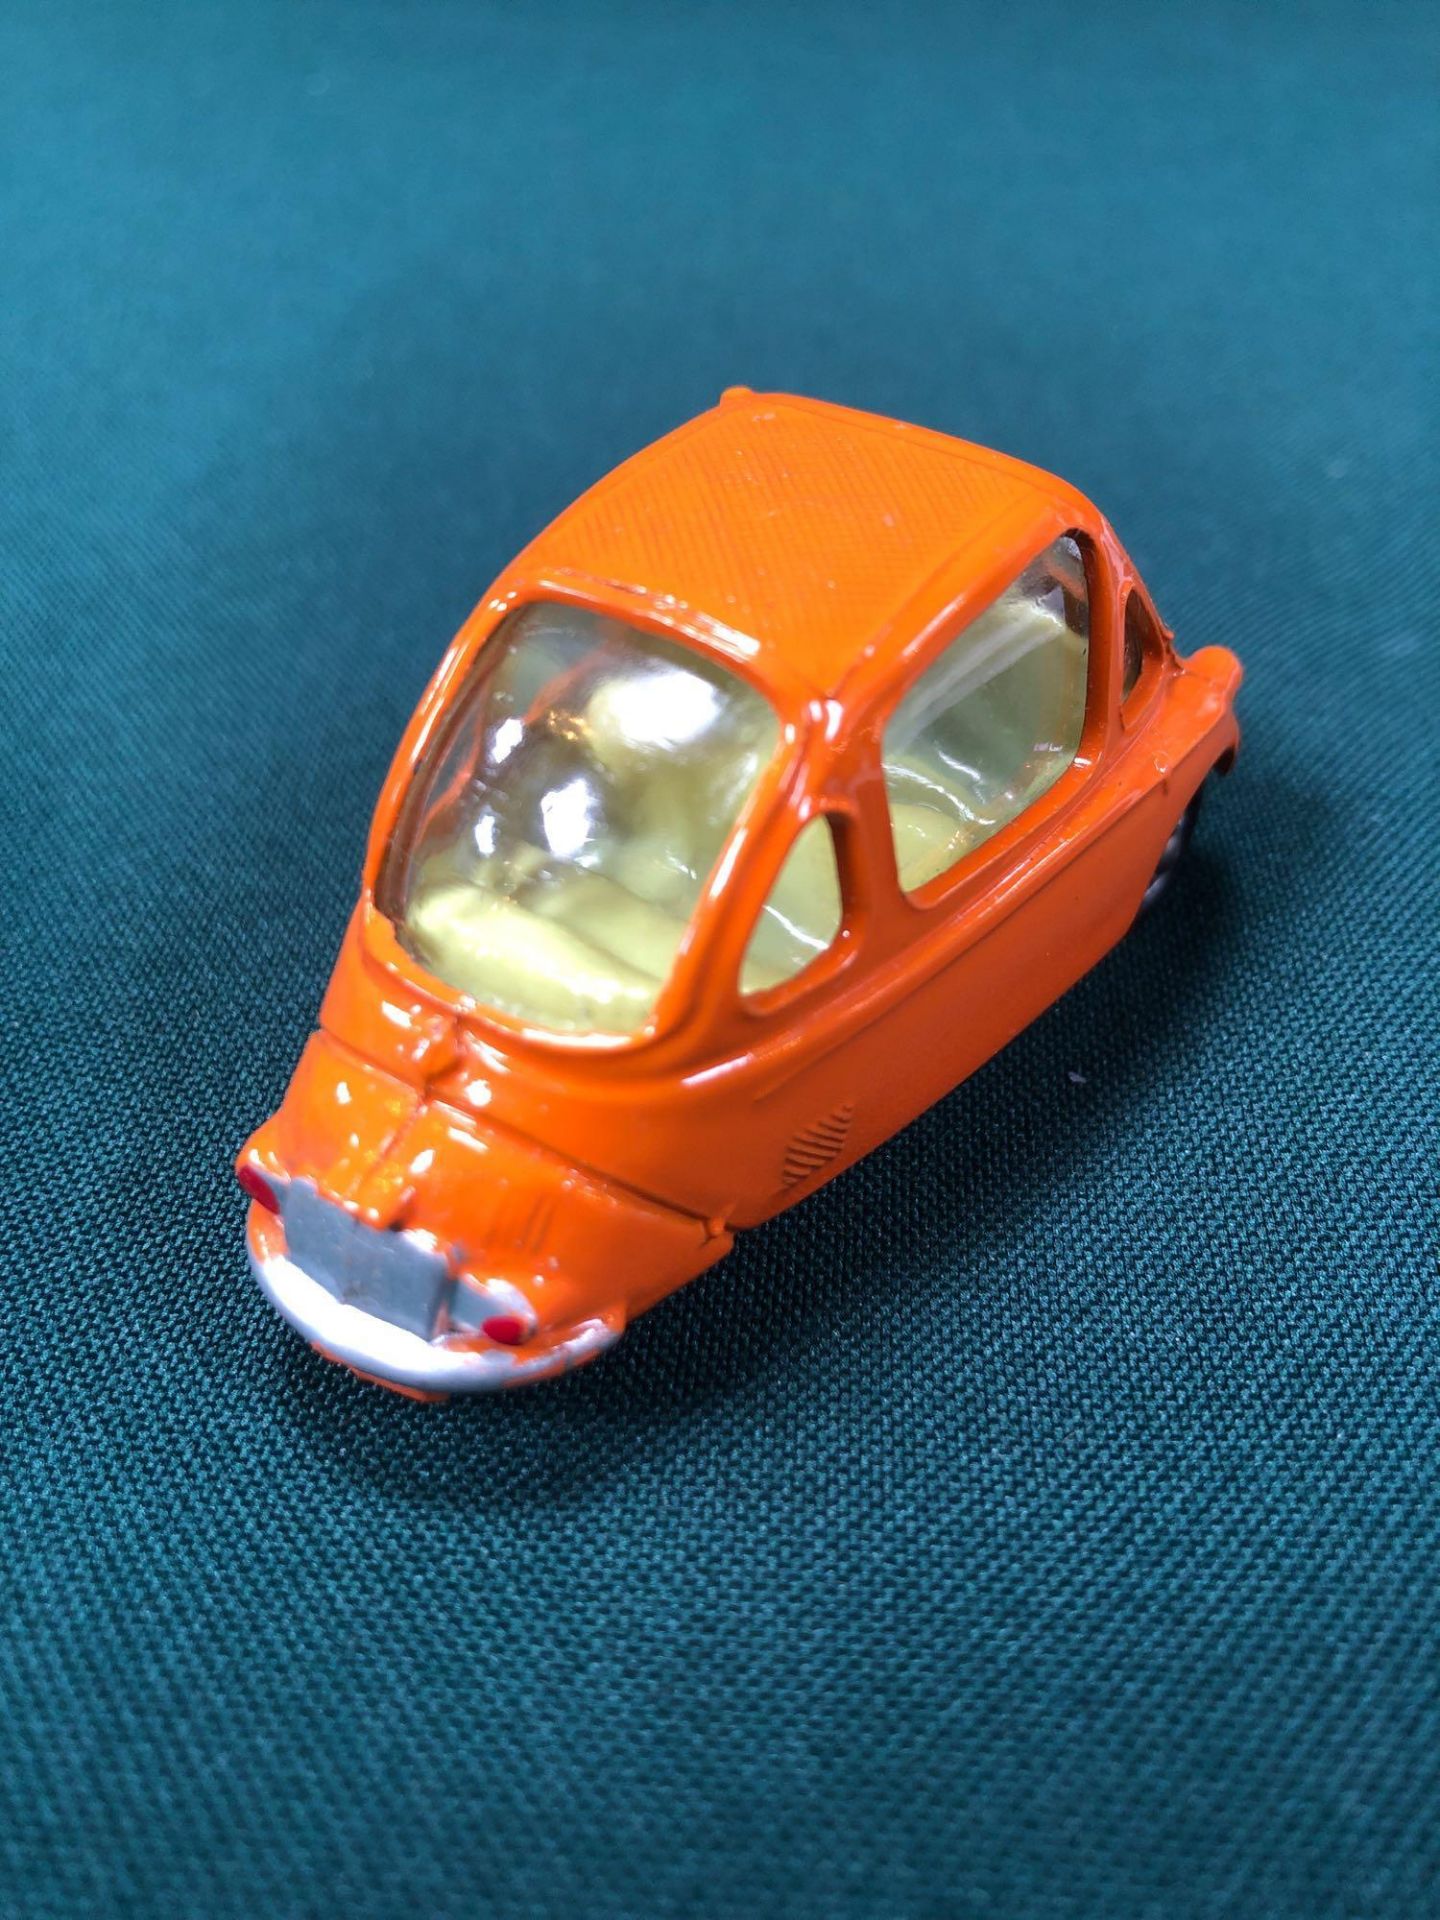 Mint Corgi Toys Are Diecast #233 Heinkel Economy Car In Orange Mint Box - Image 2 of 3